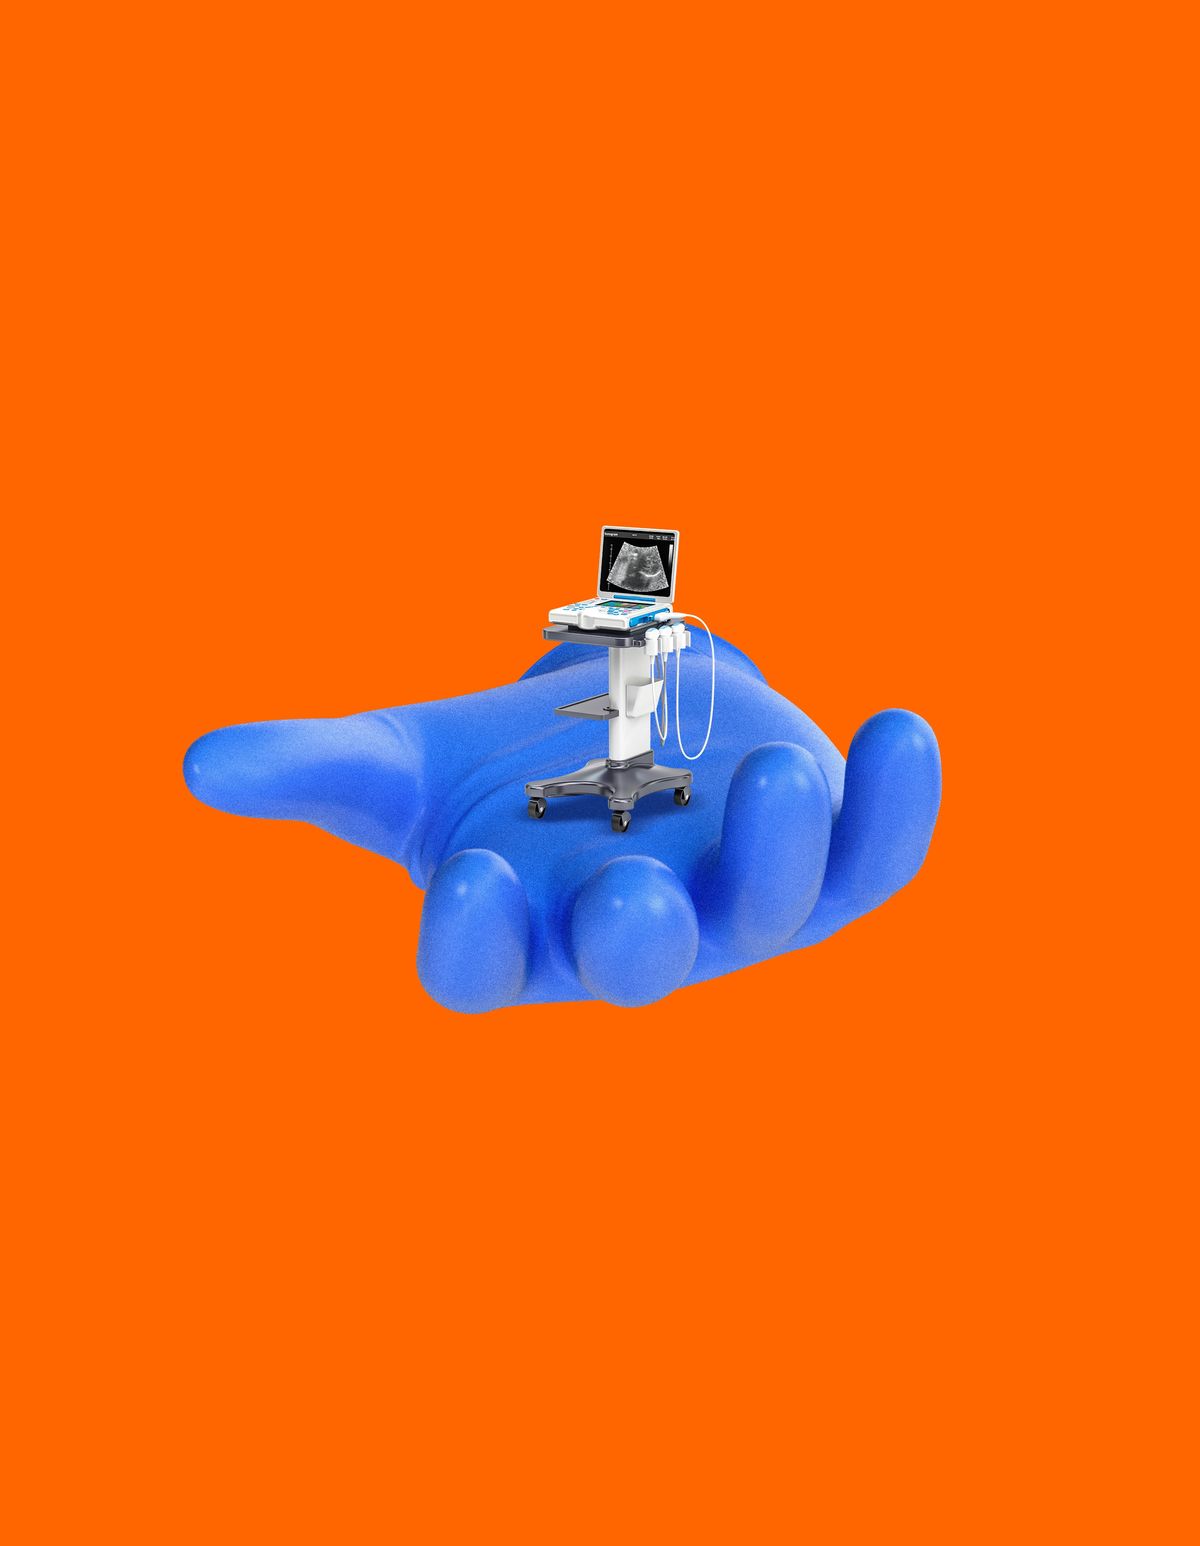 Photo illustration of a gloved hand holding a tiny ultrasound machine